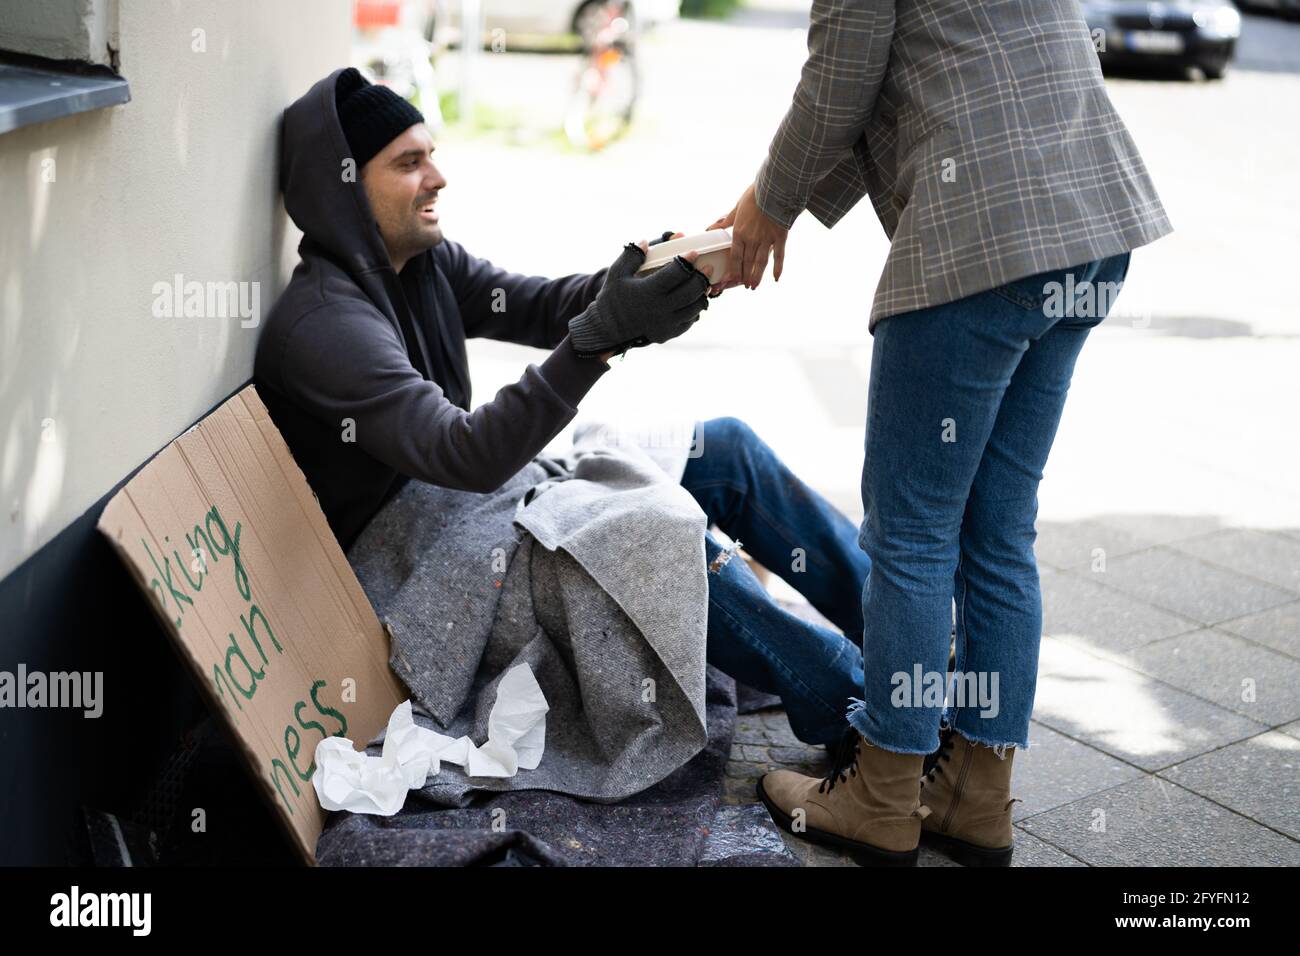 Homeless Food Help. Human Poverty. Poor Man Stock Photo